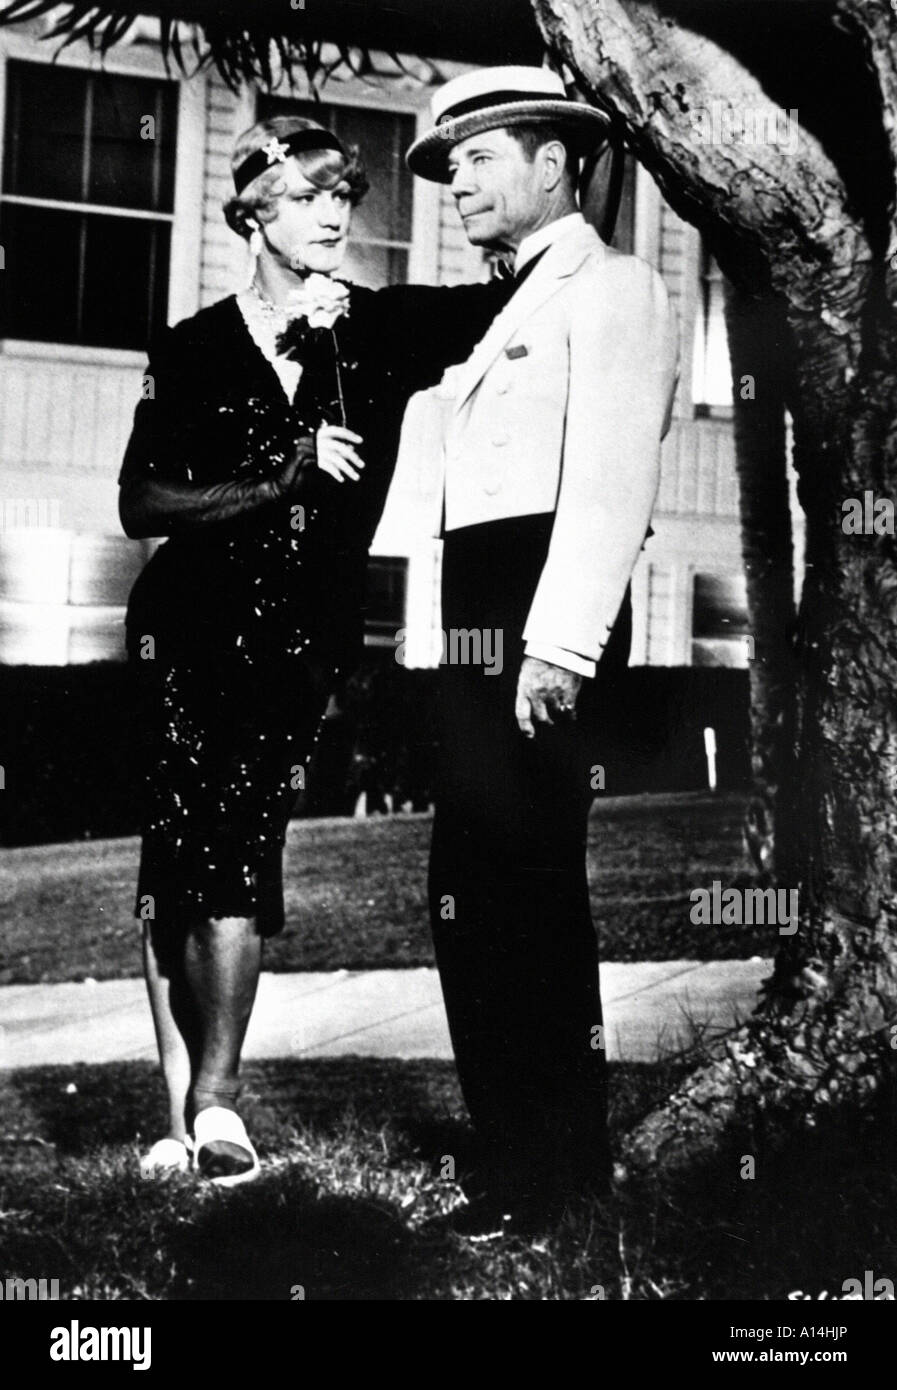 A qualcuno piace caldo 1959 Billy Wilder Jack Lemmon Joe e marrone Foto Stock